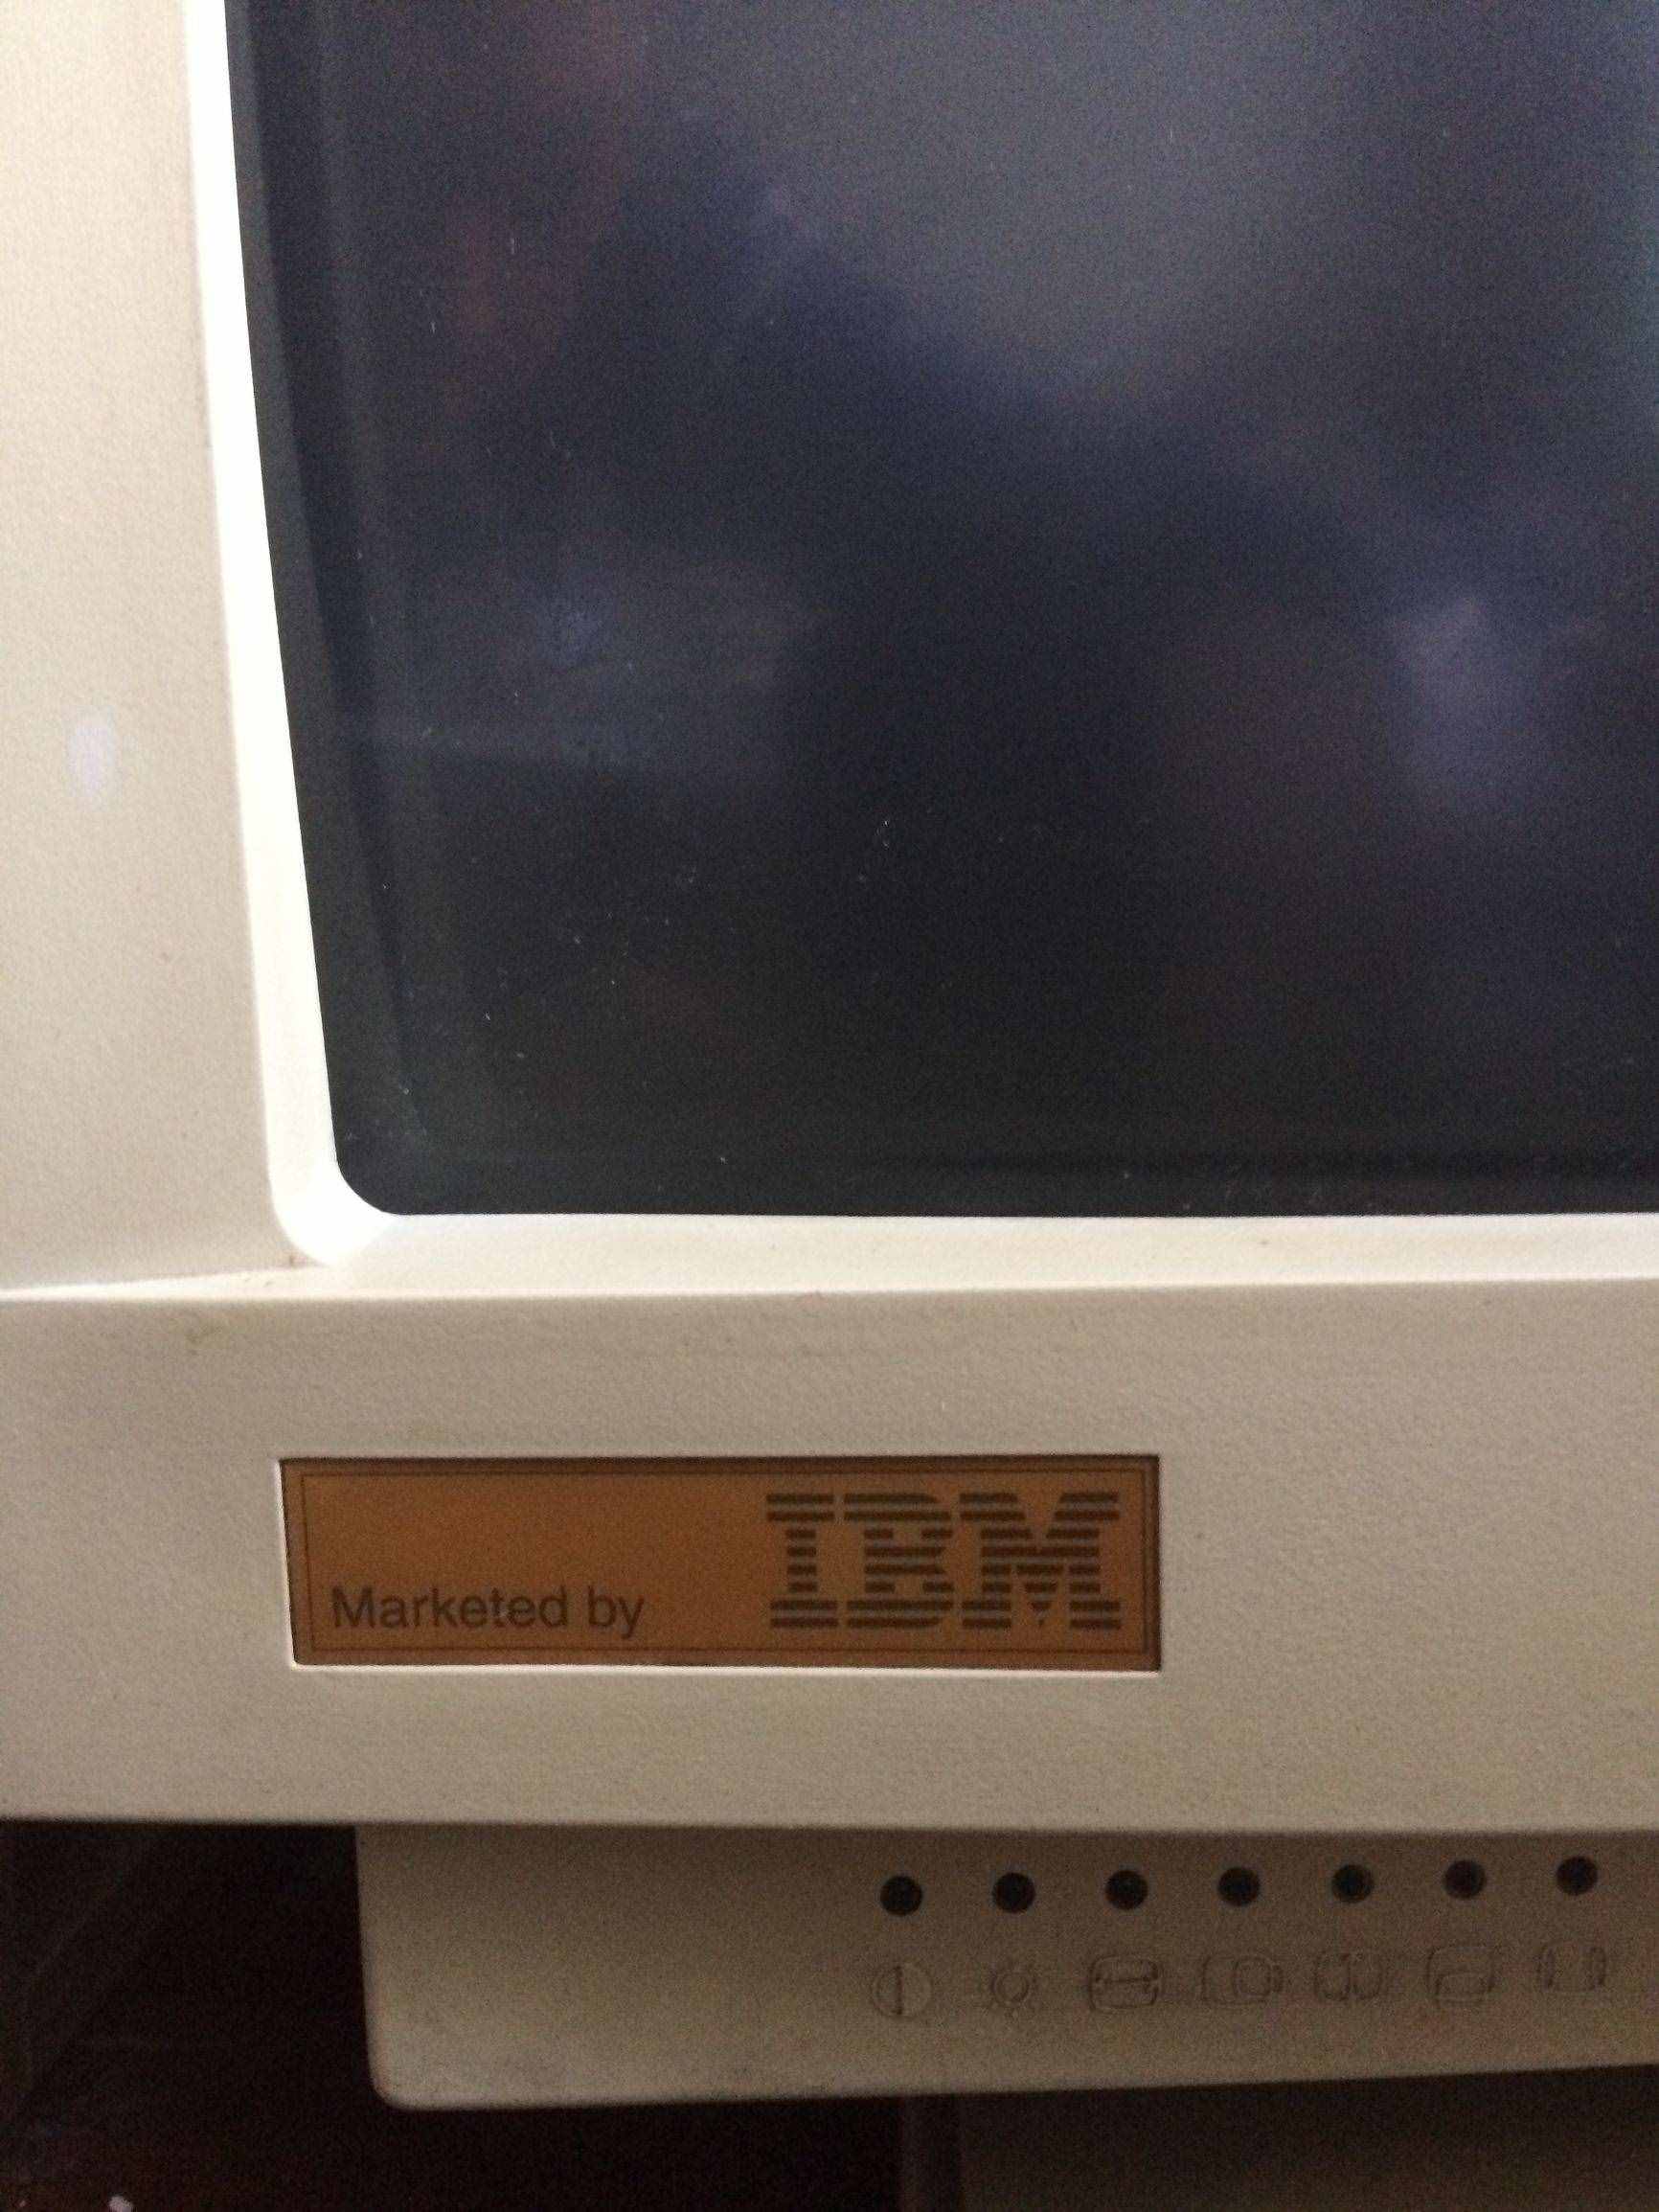 1997年的IBM台式机能进IBM博物馆吗？